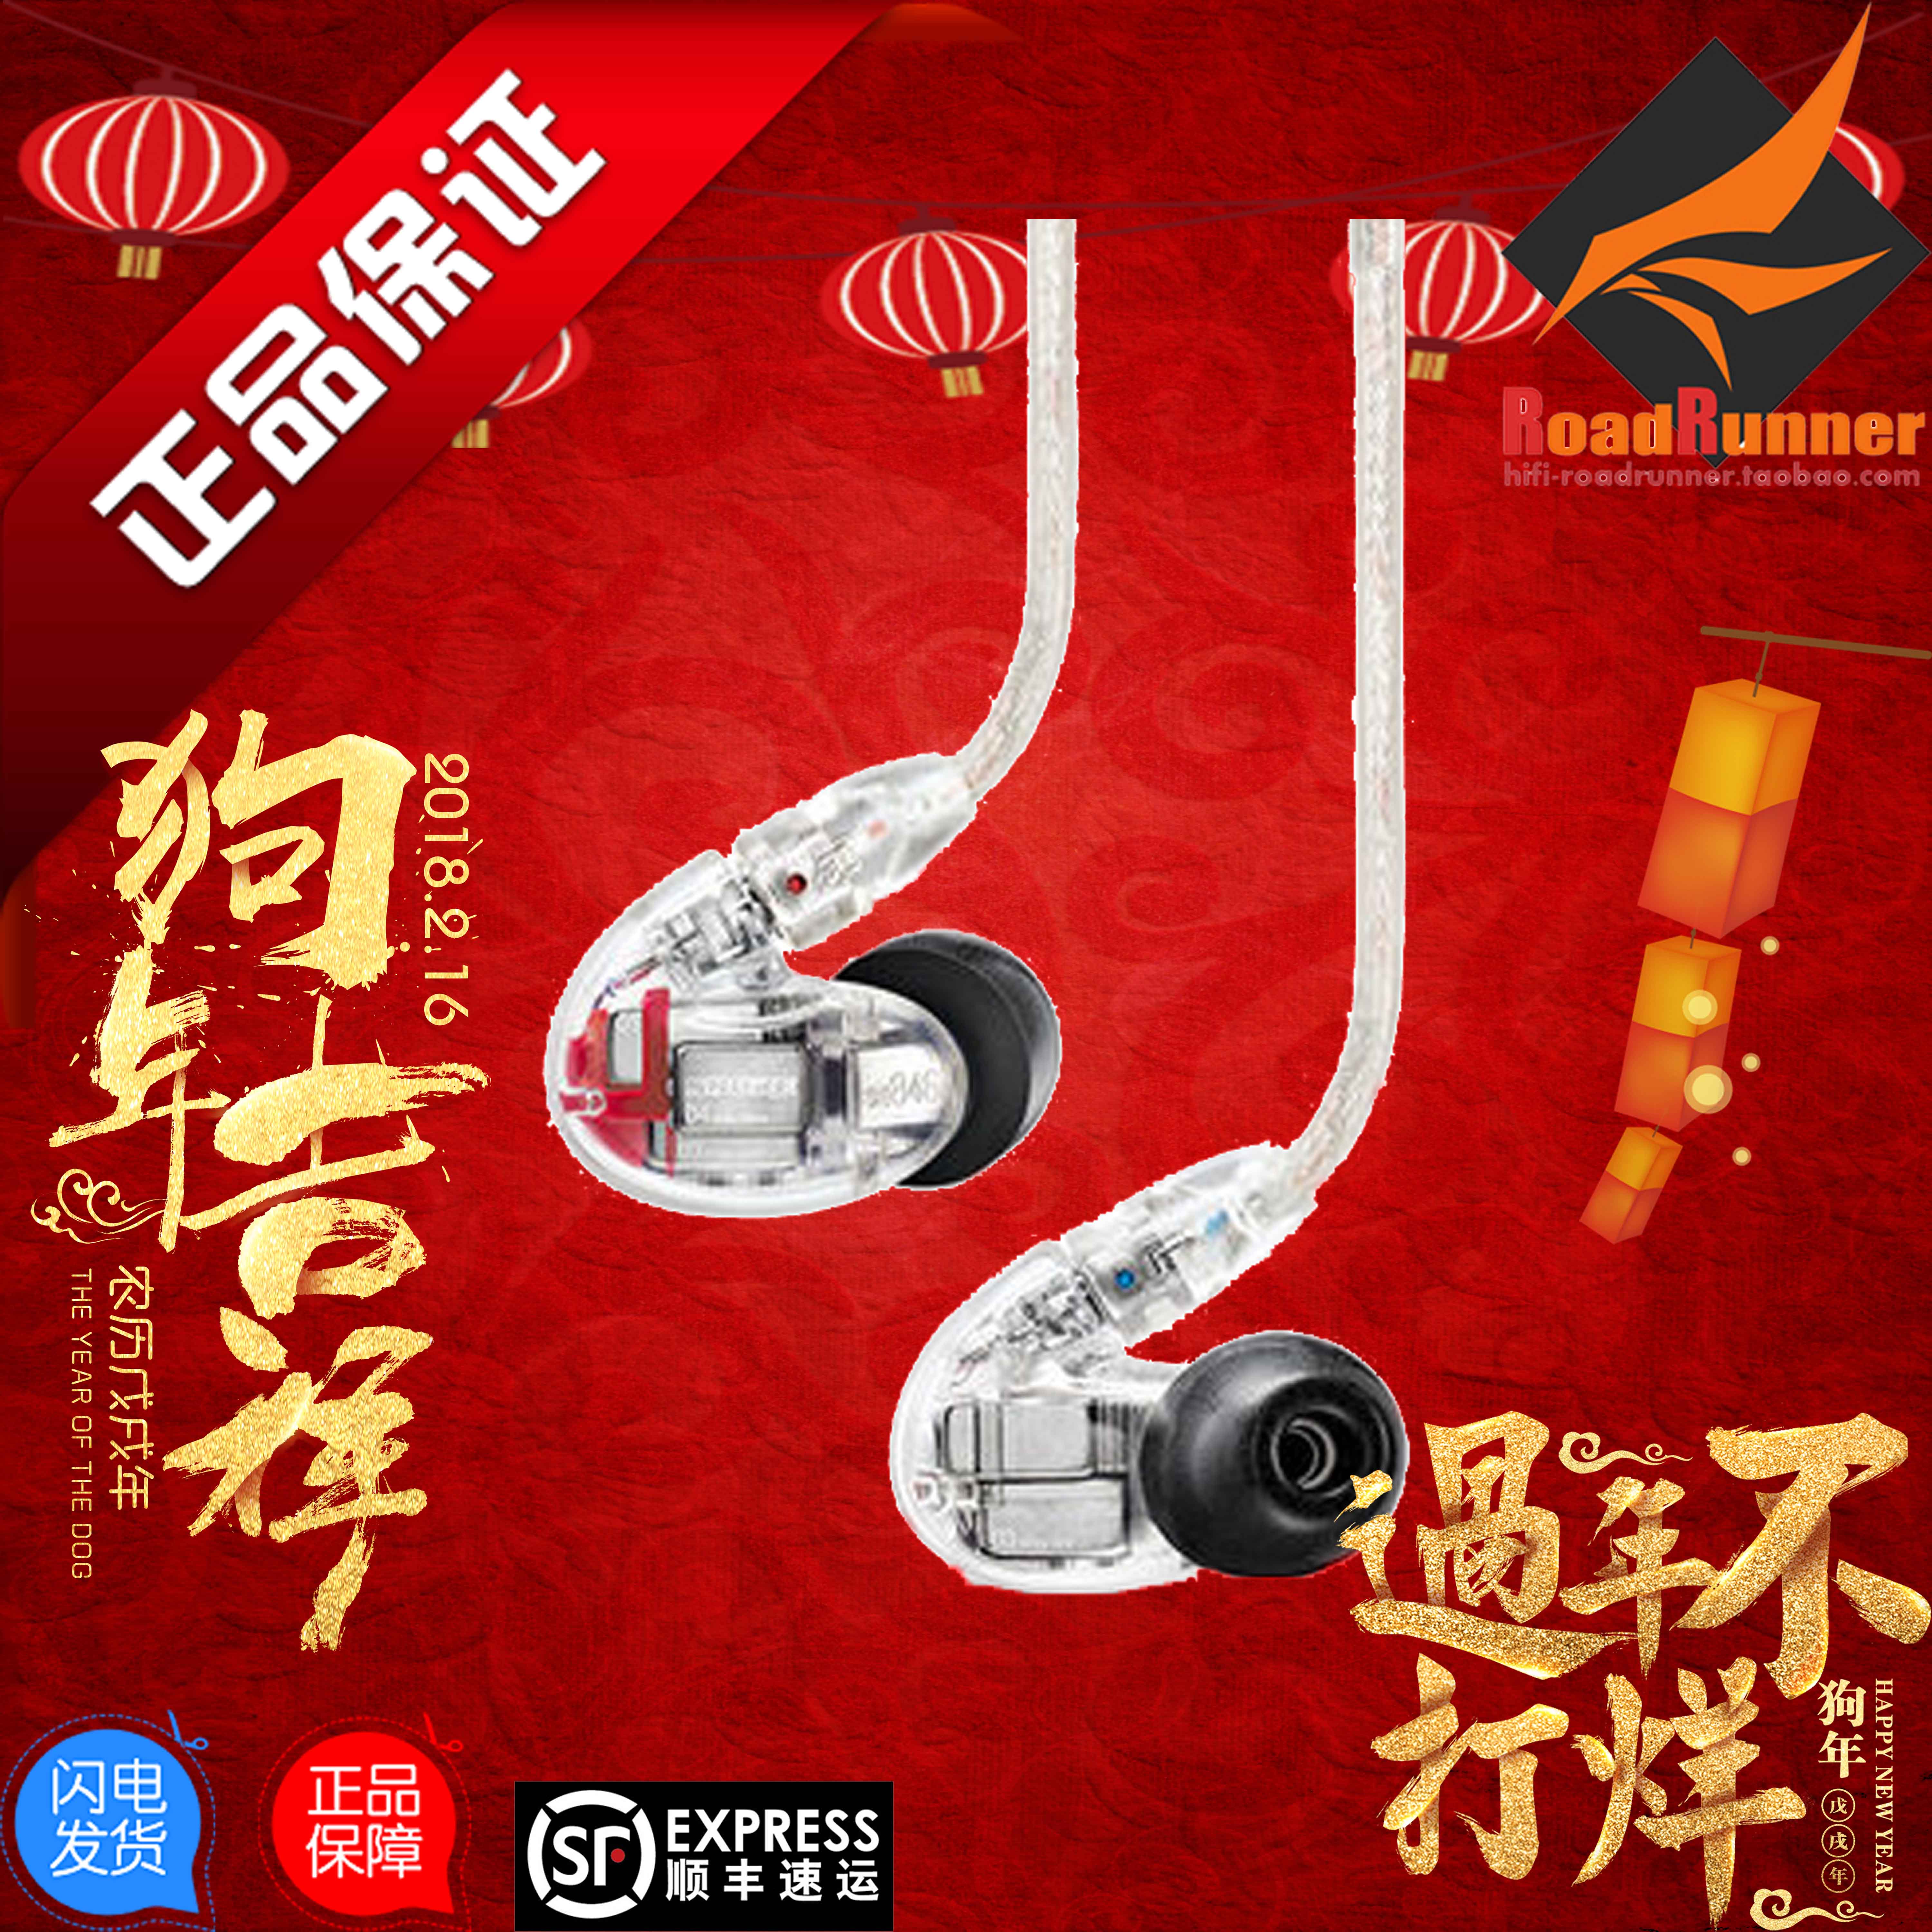 RR+Dachang Guohang+Shunfeng_Shure/Shuer SE846 HiFi popular earplug earphones